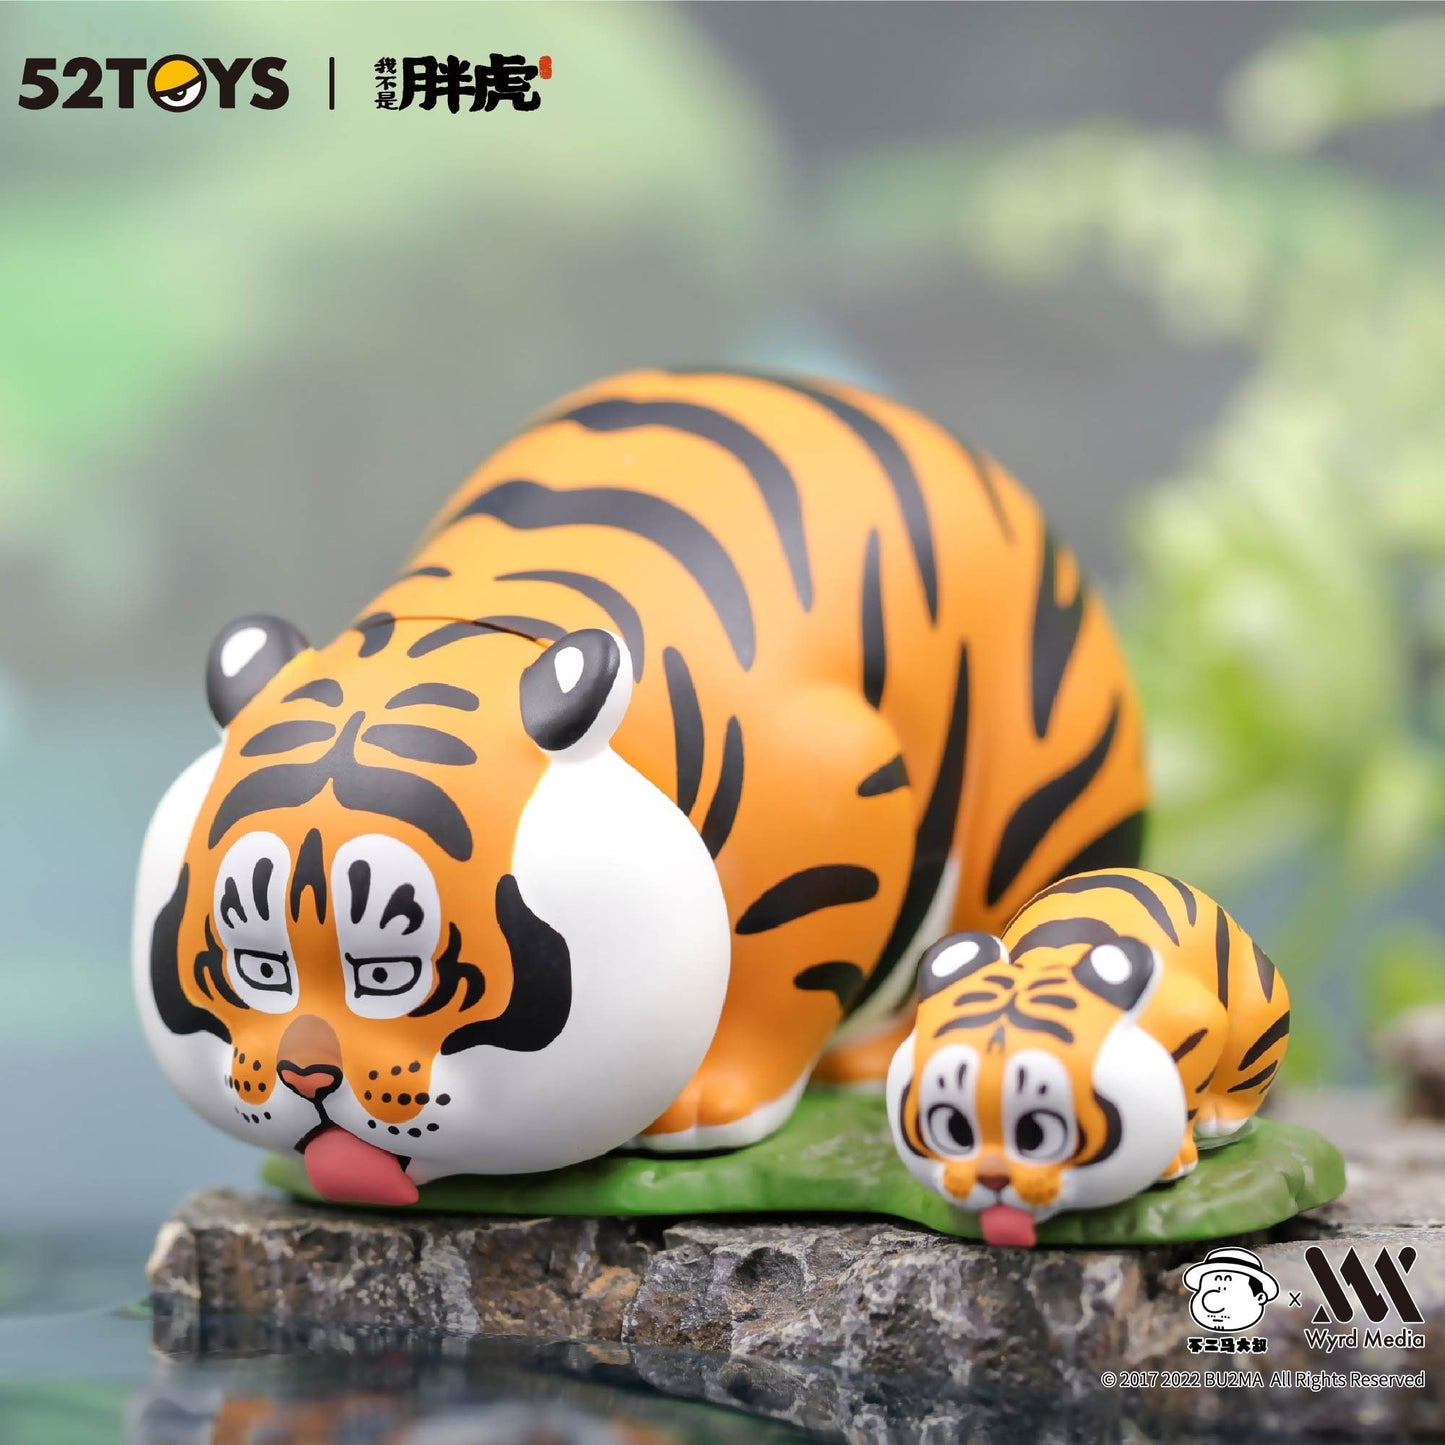 Fat Tiger Pang Hu & Baby Series, Random Blind Box, 8 Designs, Bu2ma x 52Toys